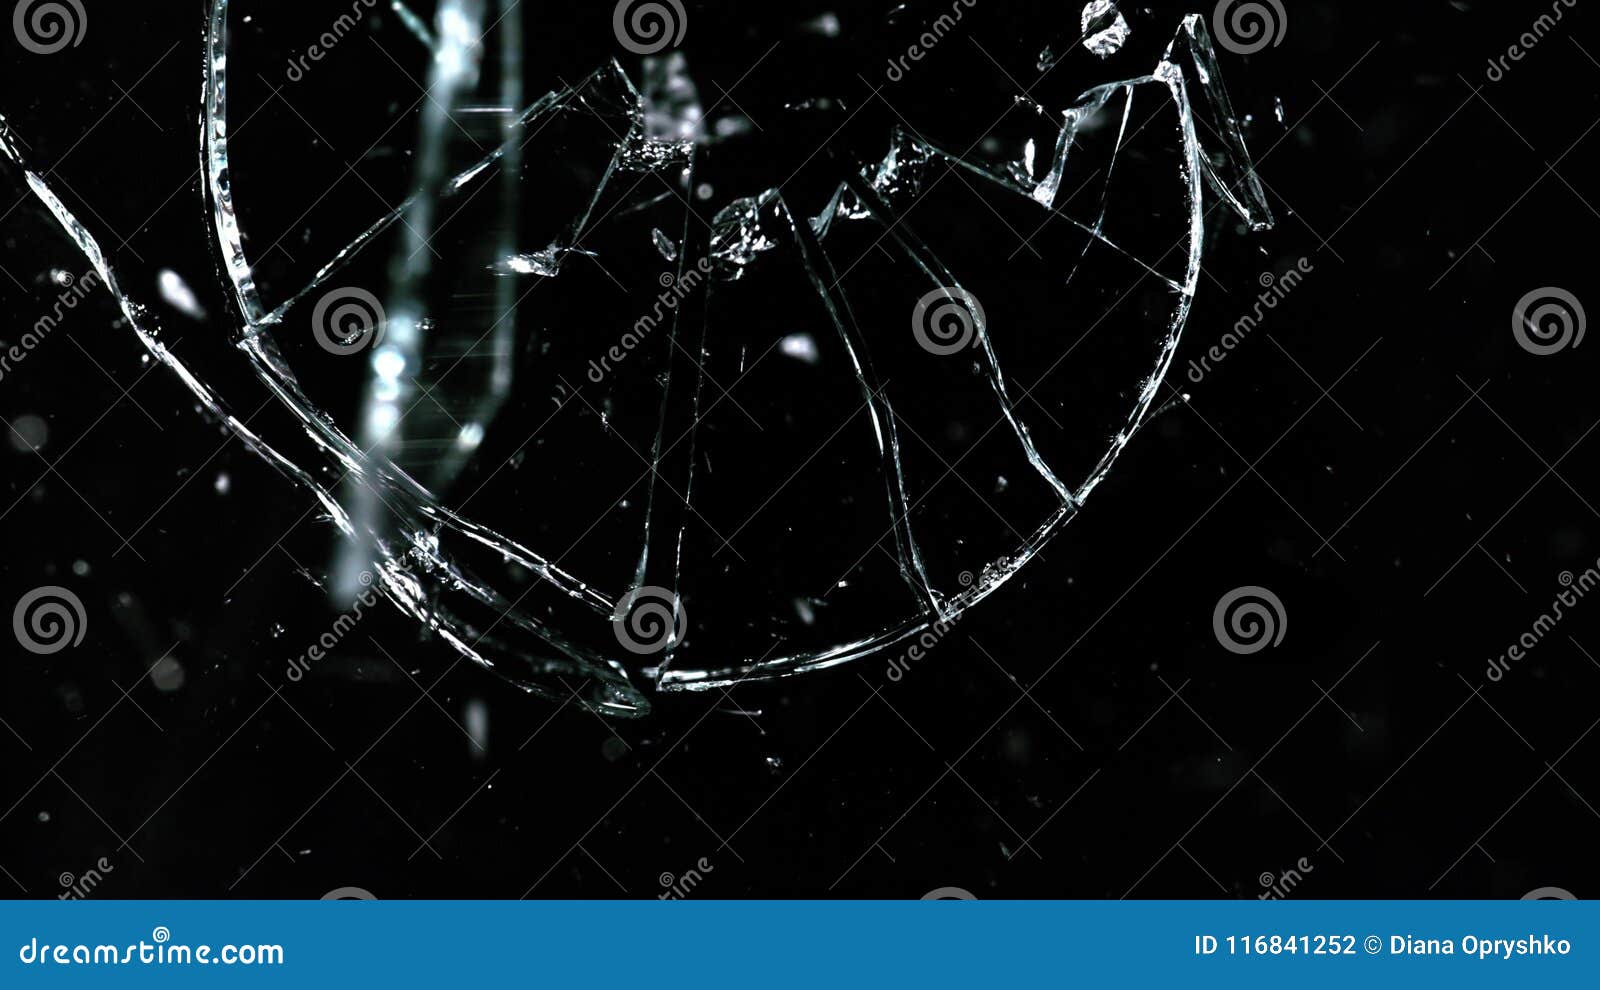 Broken glass pieces Stock Photo by ©pavsie 37642363